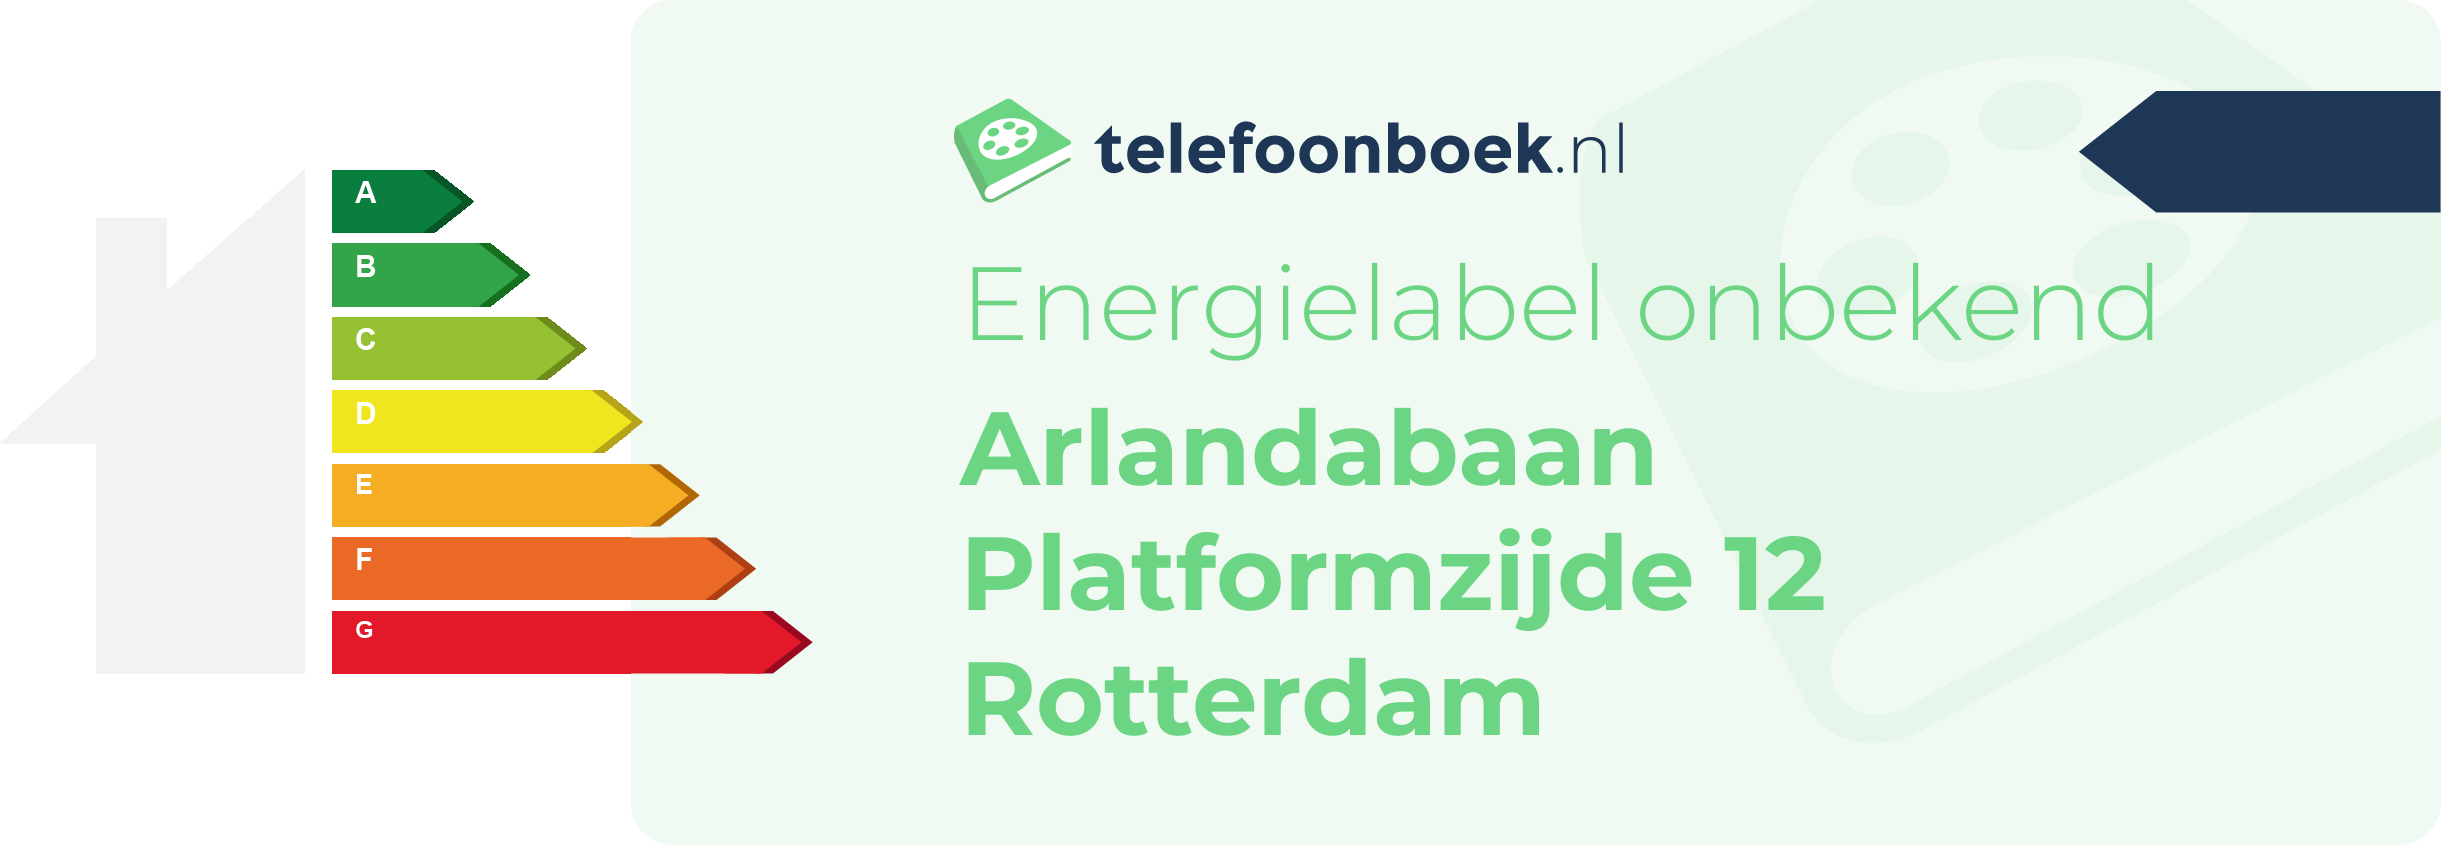 Energielabel Arlandabaan Platformzijde 12 Rotterdam